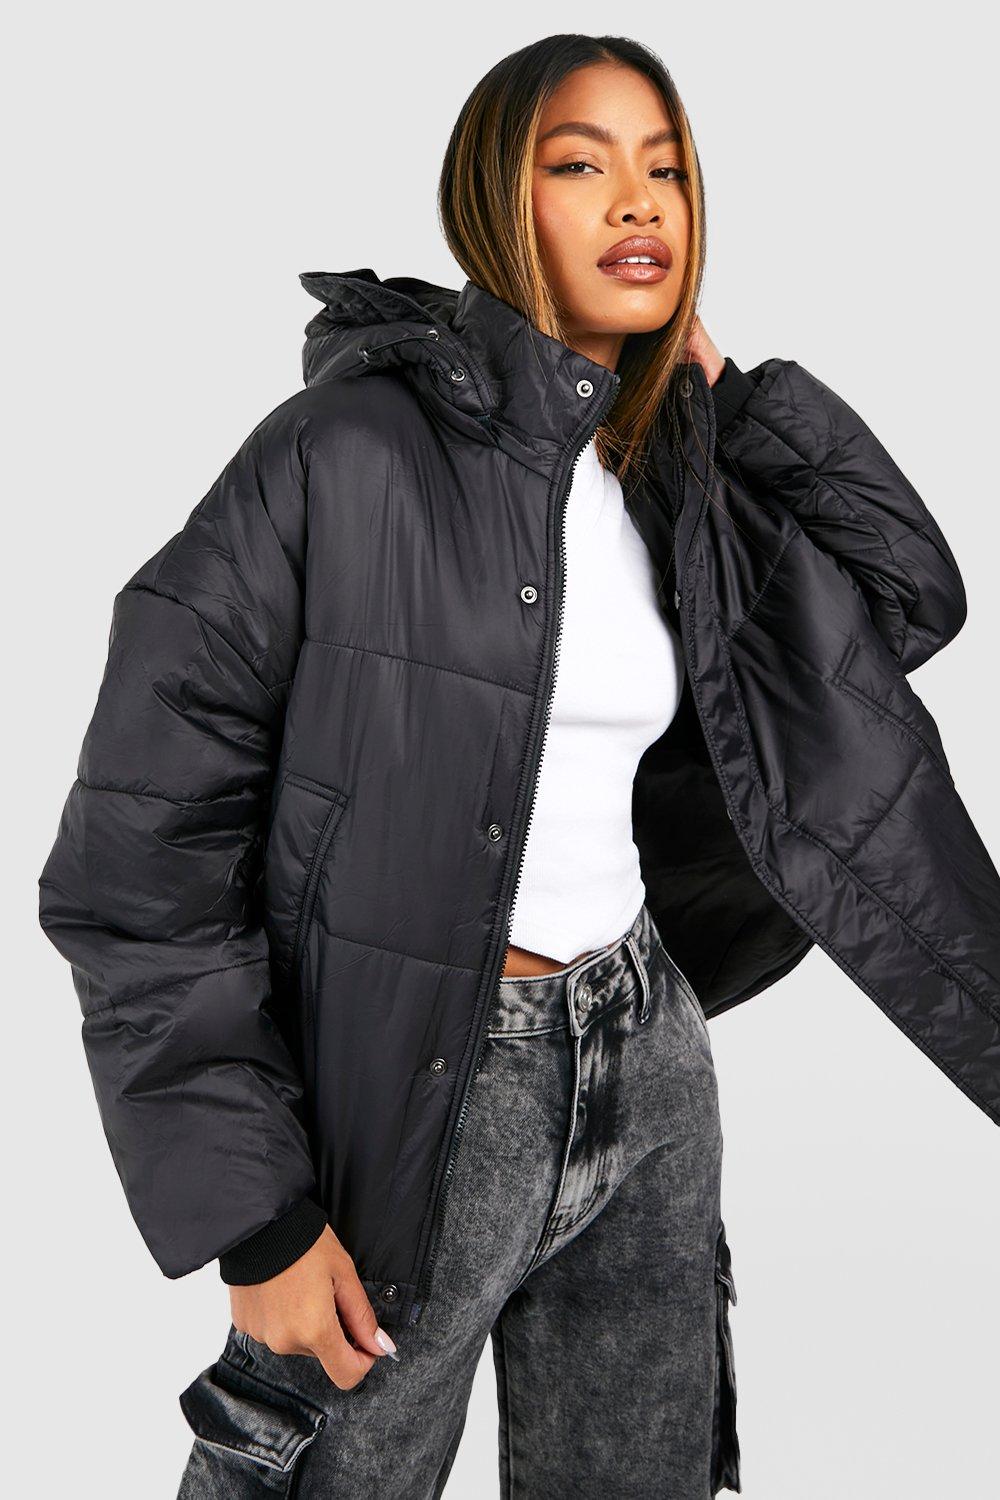 black puffer jacket women with hood